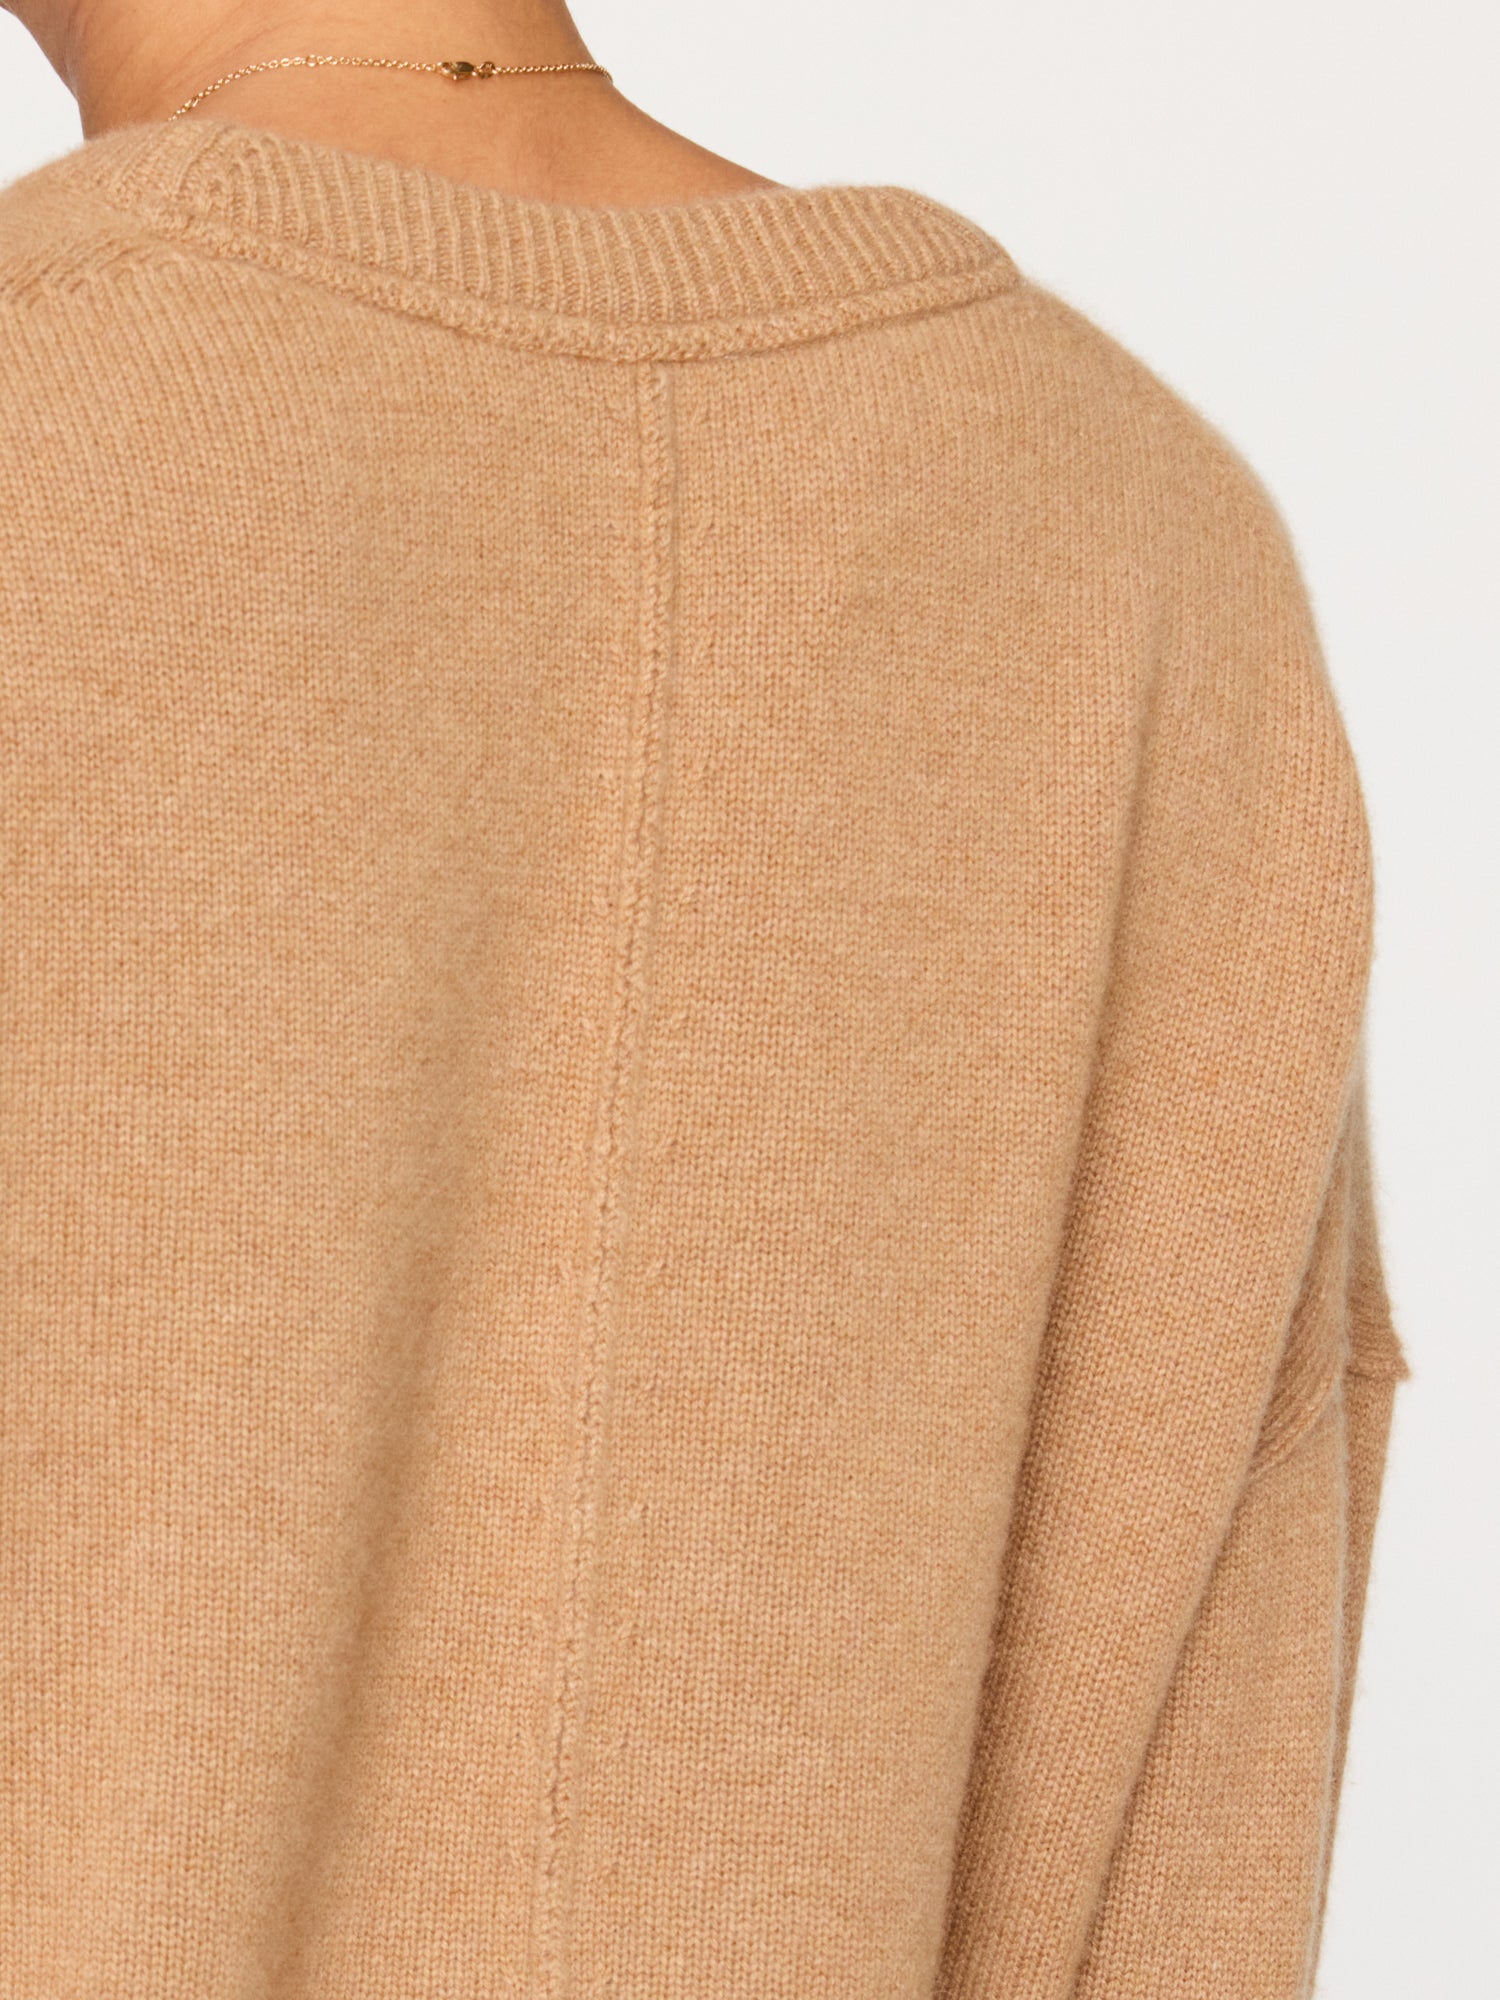 Everyday cashmere crewneck tan sweater close up